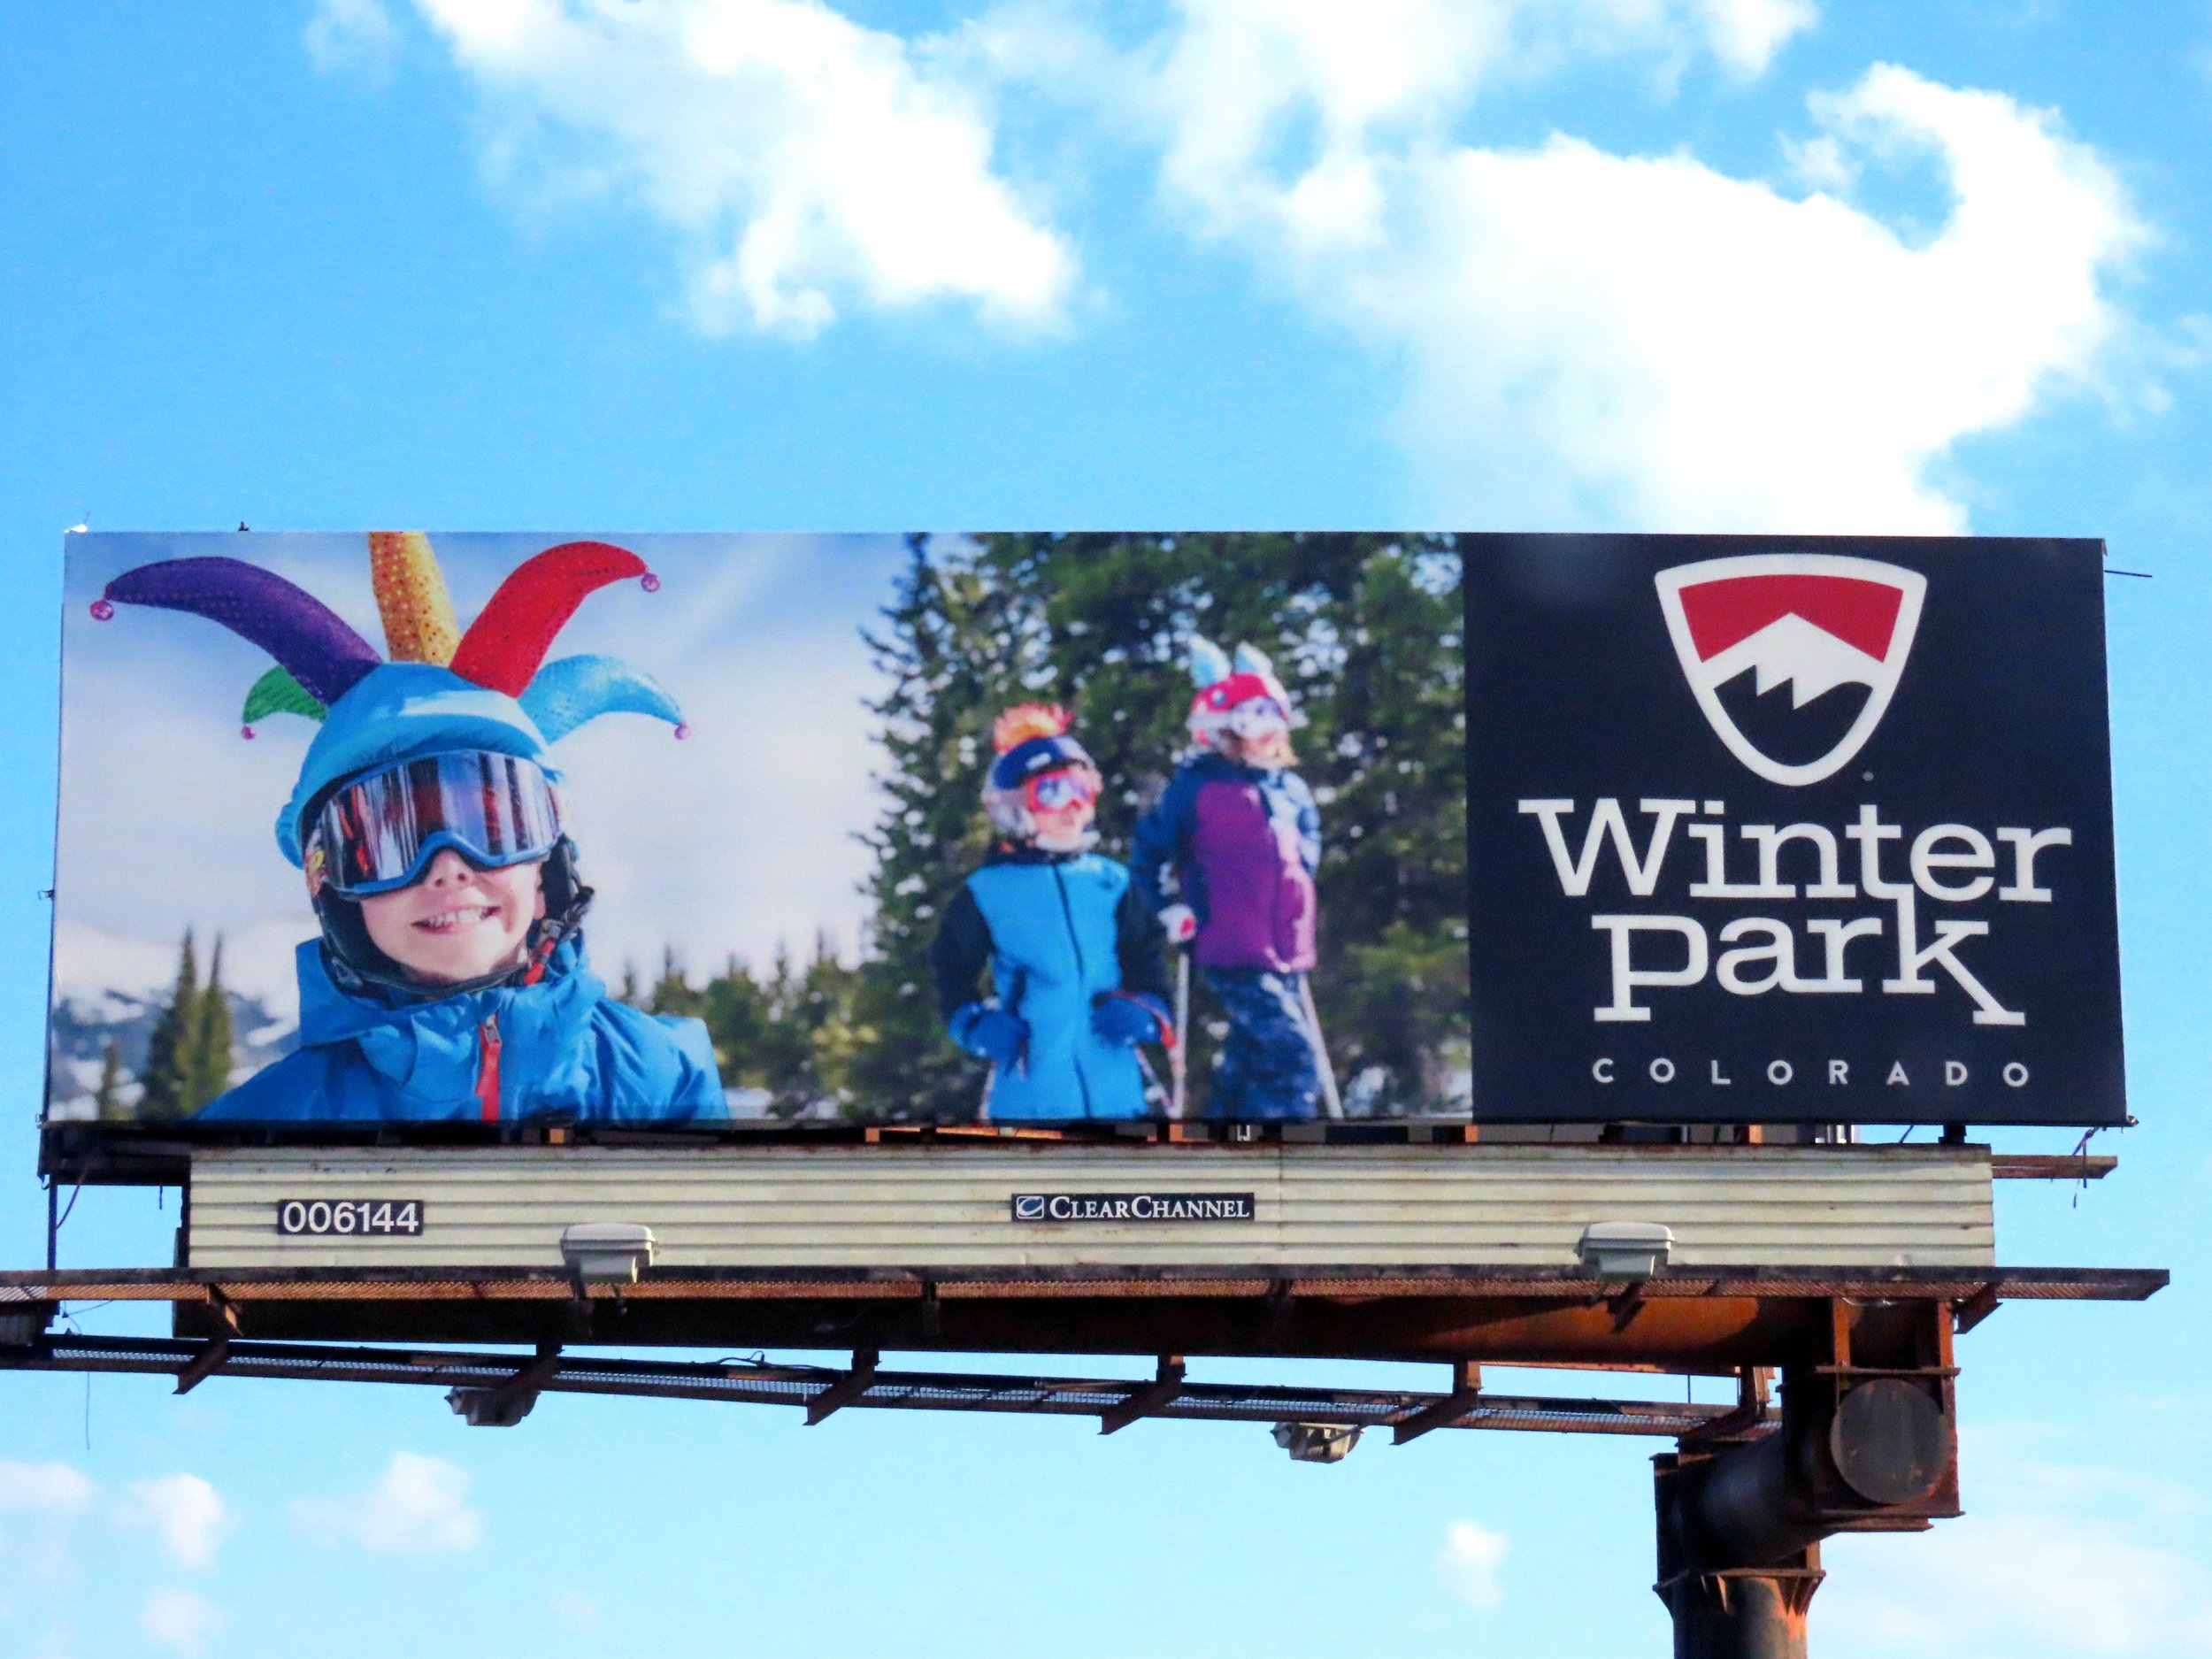 Winter Park Resort Billboard Advertising Fun with Friends.jpg